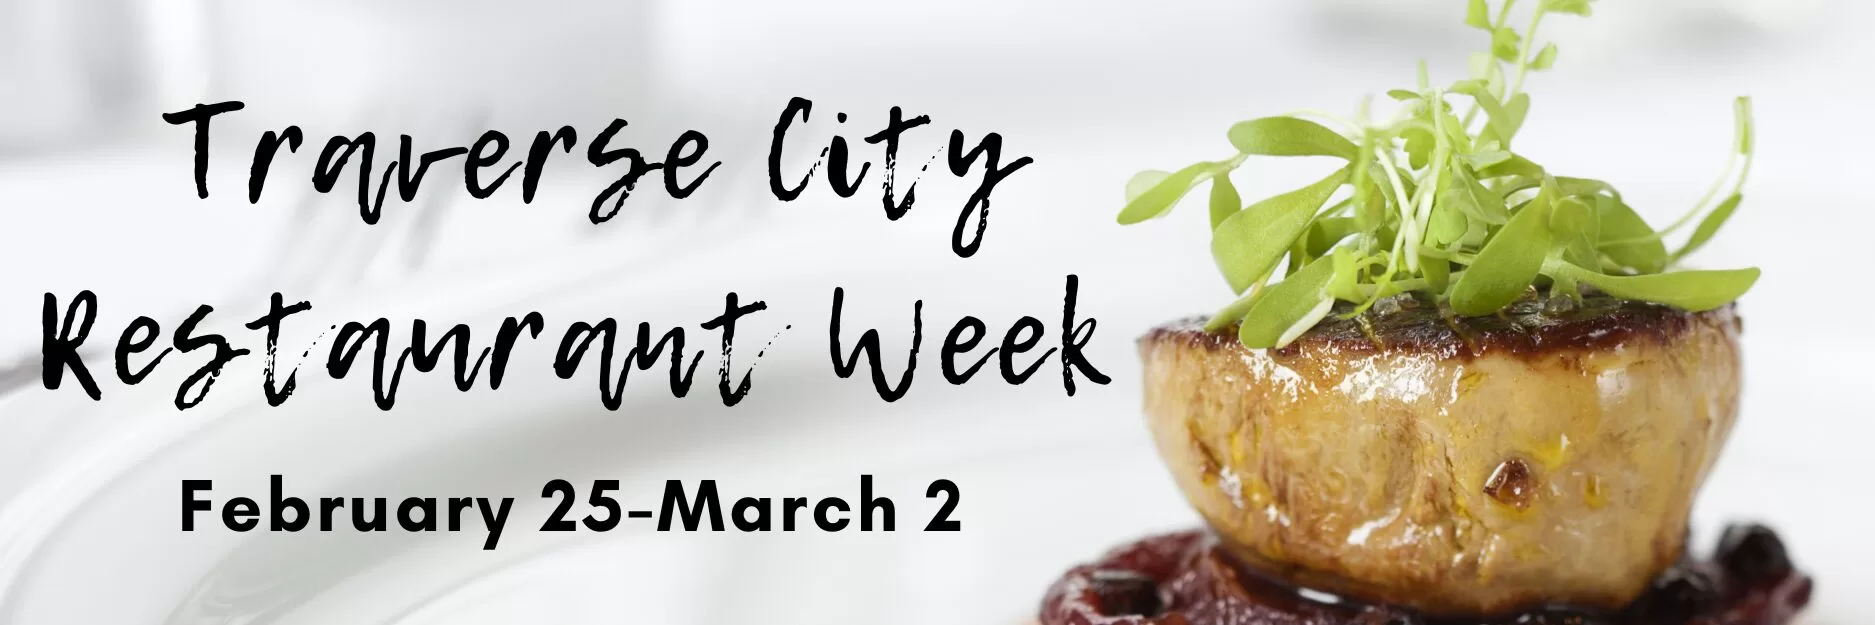 Traverse City Restaurant Week